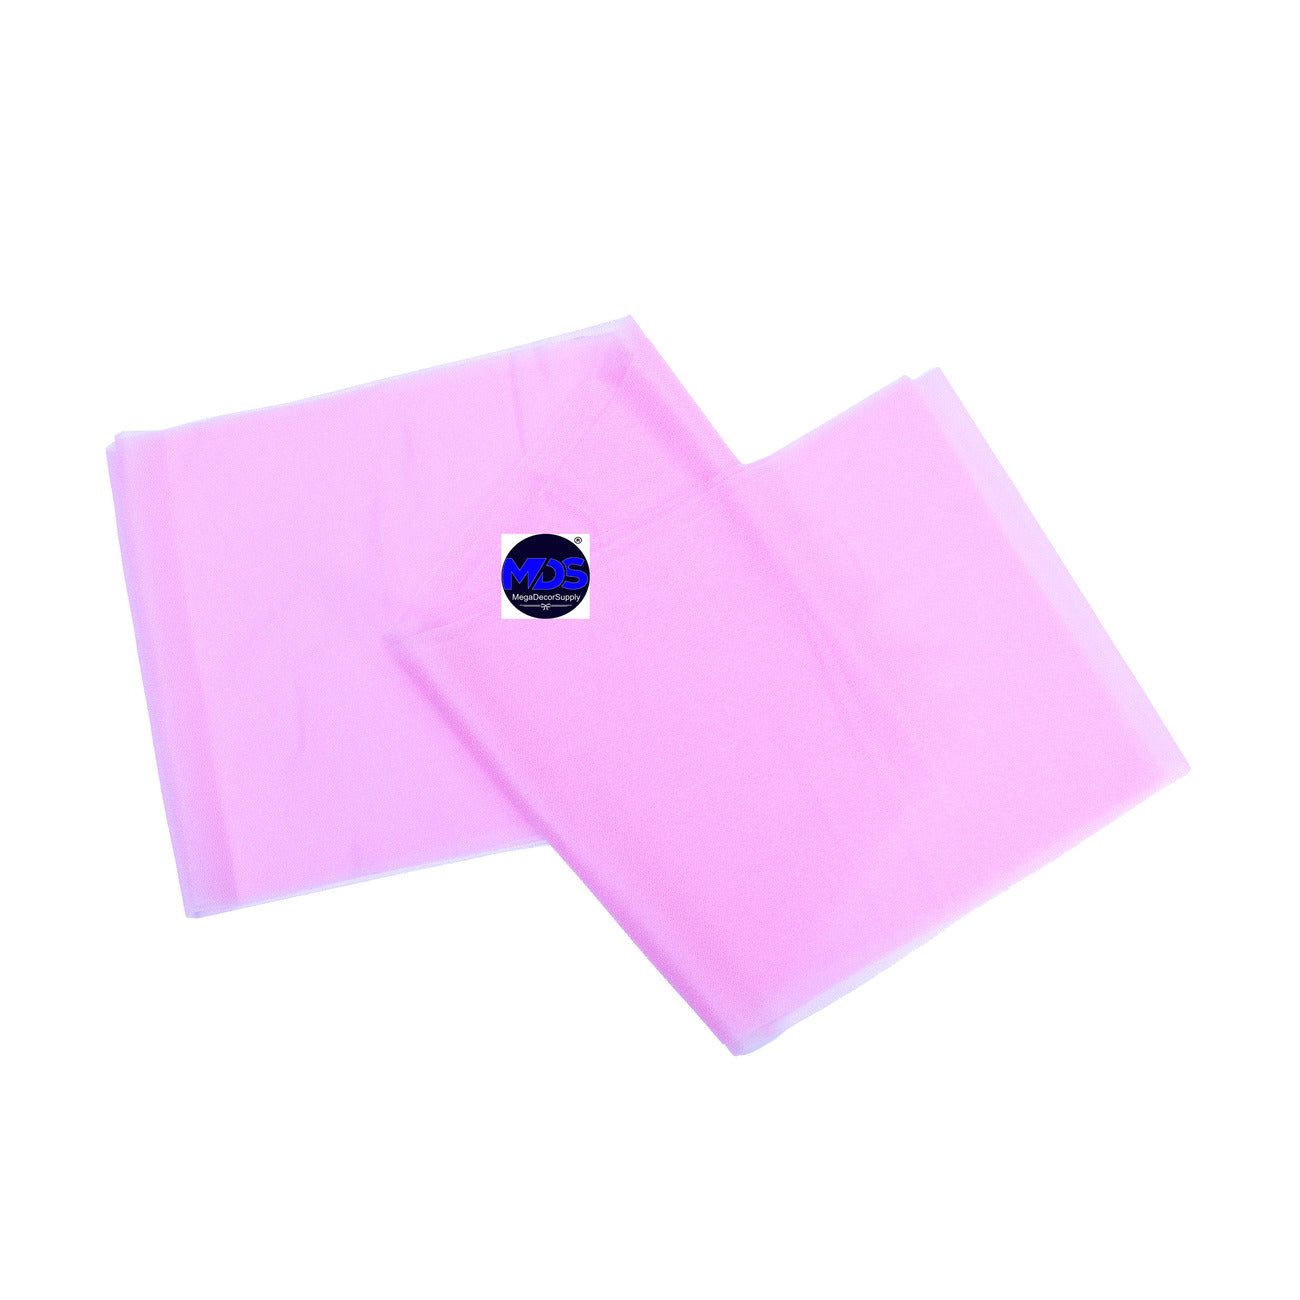 Bubblegum Pink,9cf92165-d890-4115-8d36-83172ee610bf